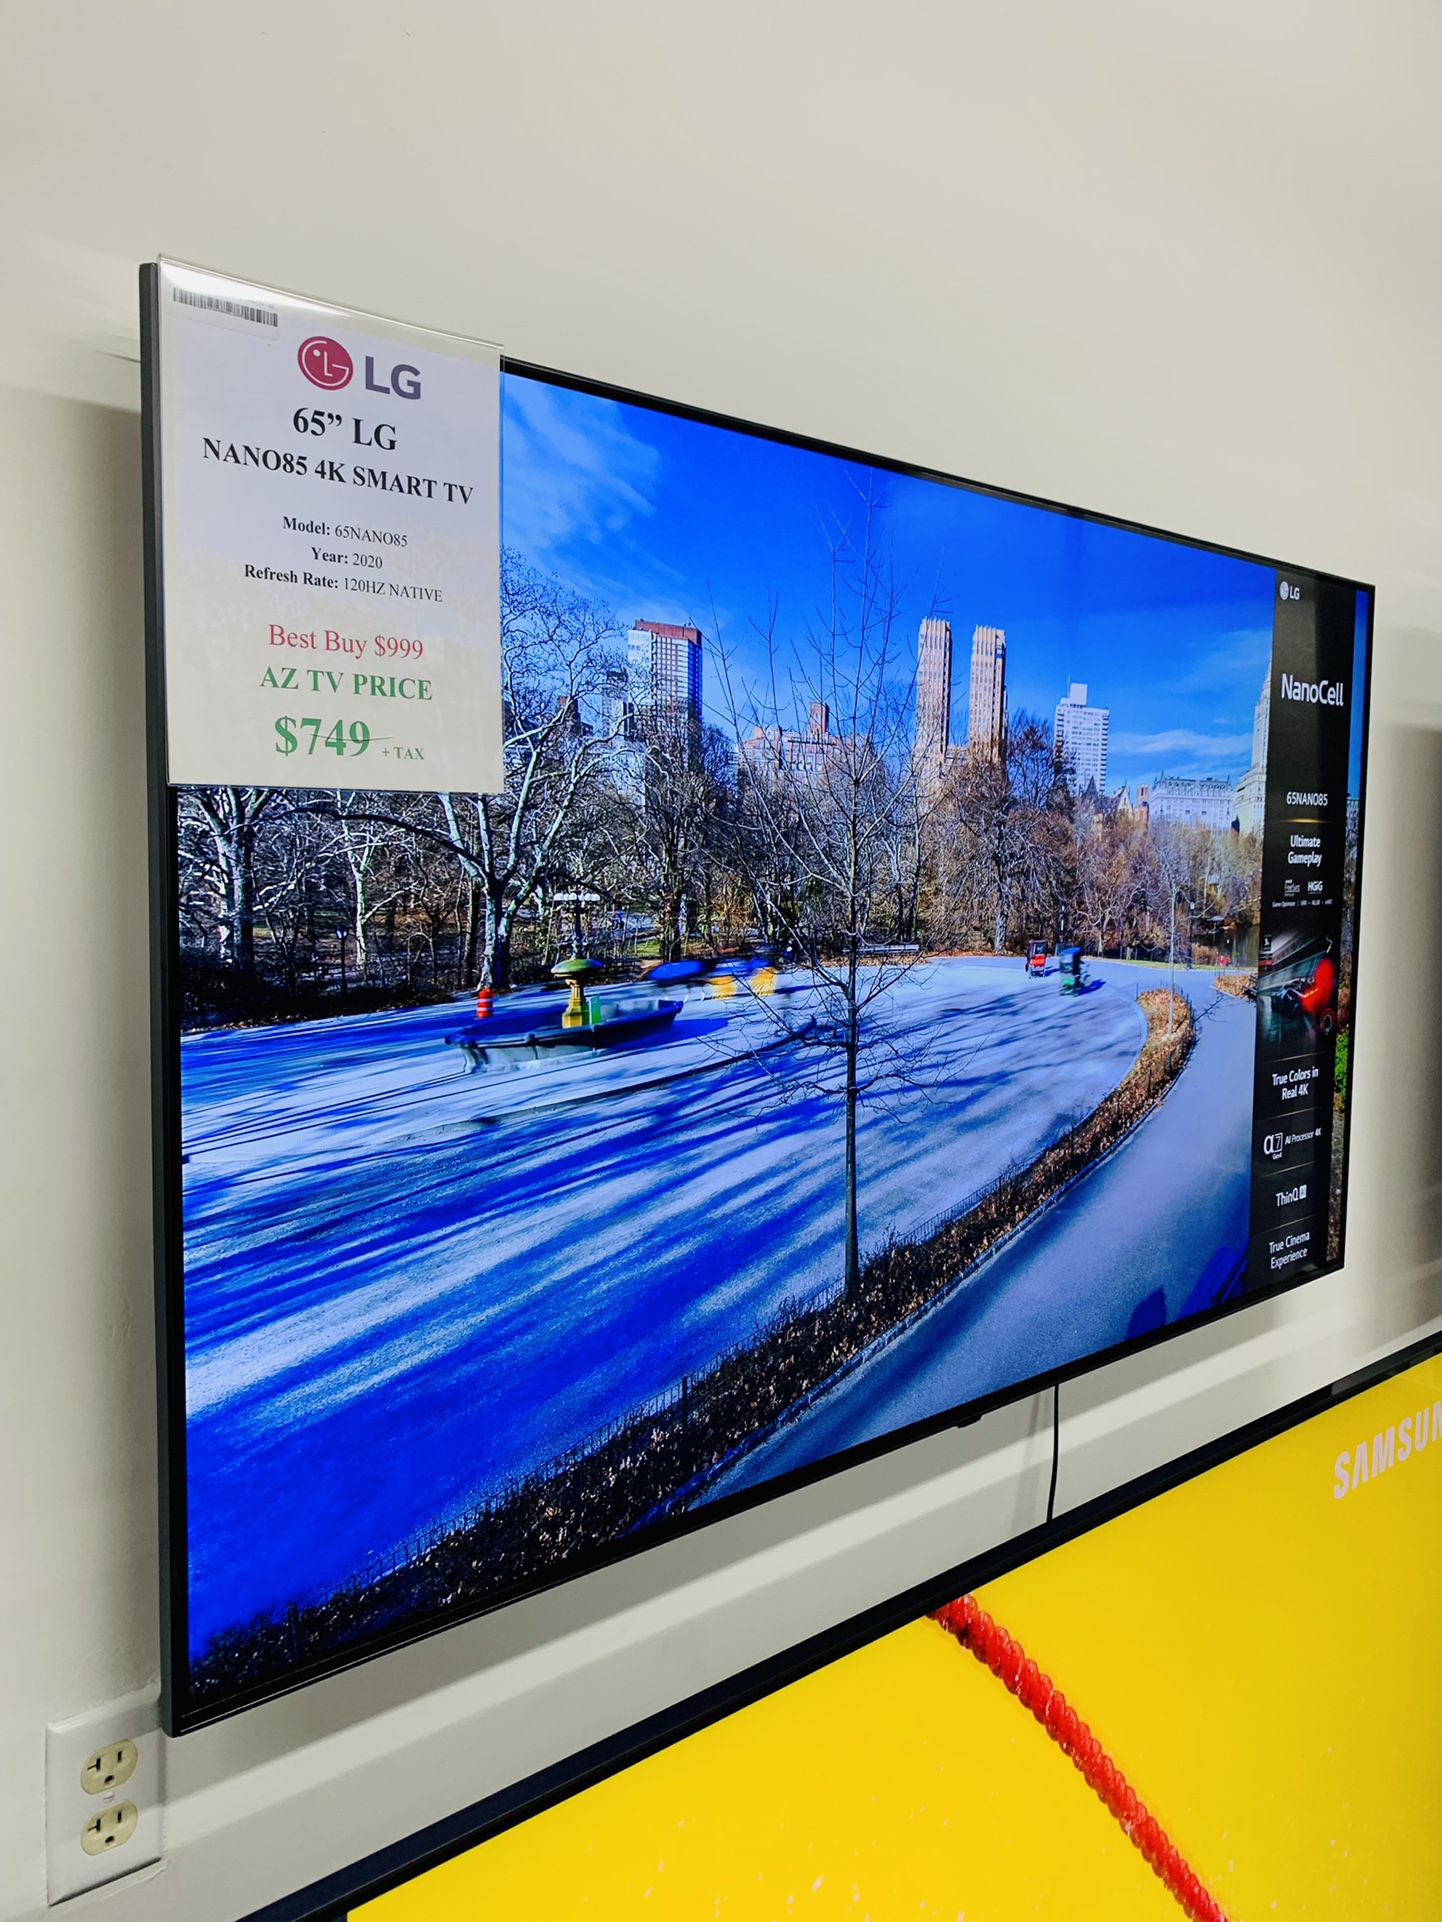 LG 65” NANO CELL 4K SMART TV - 120HZ HDMI 2.1 - AMAZING COLORS - SUPER THIN! $50 DOWN TAKE IT HOME